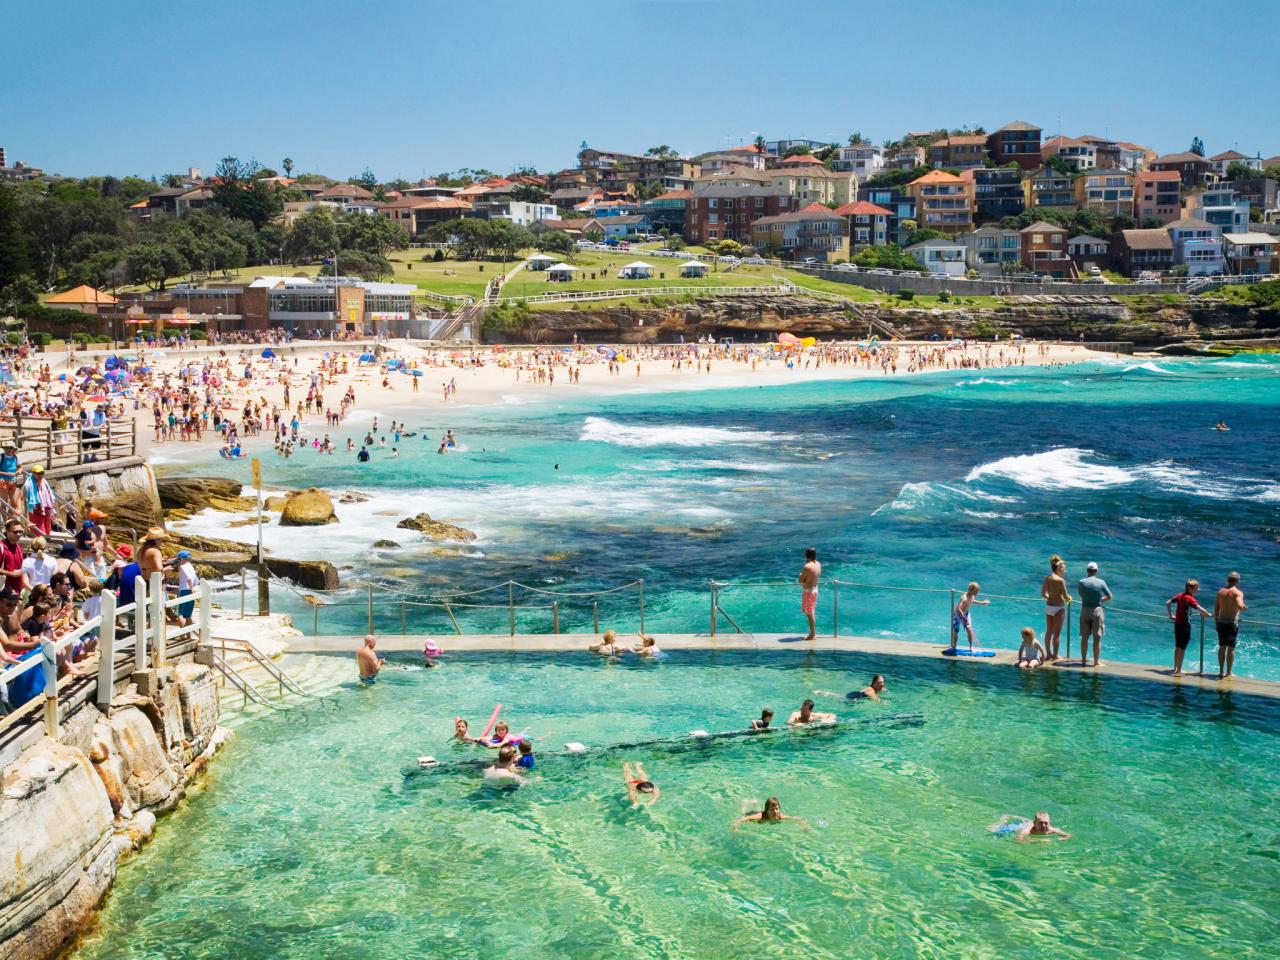 AUSTRALIA'S BEST BEACH TOWNS